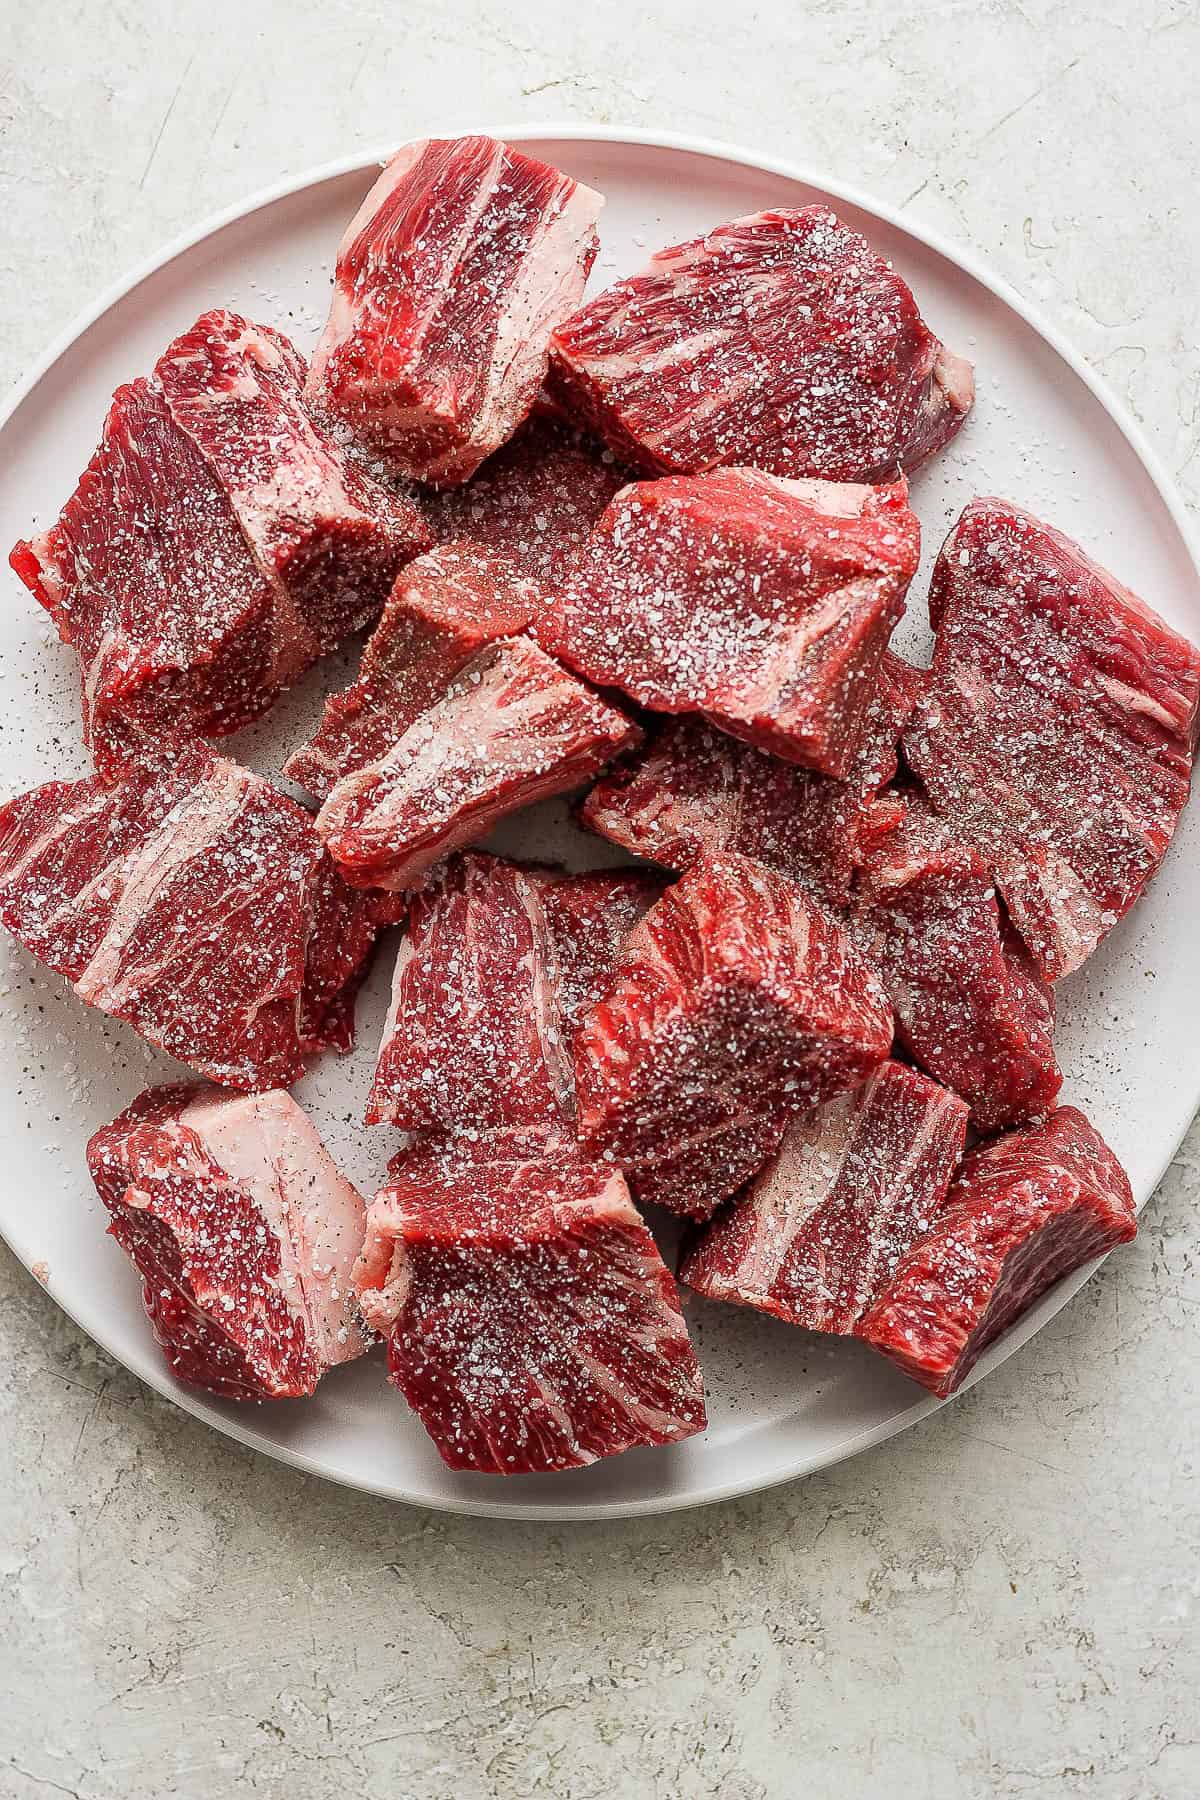 Seasoned raw beef on both sides